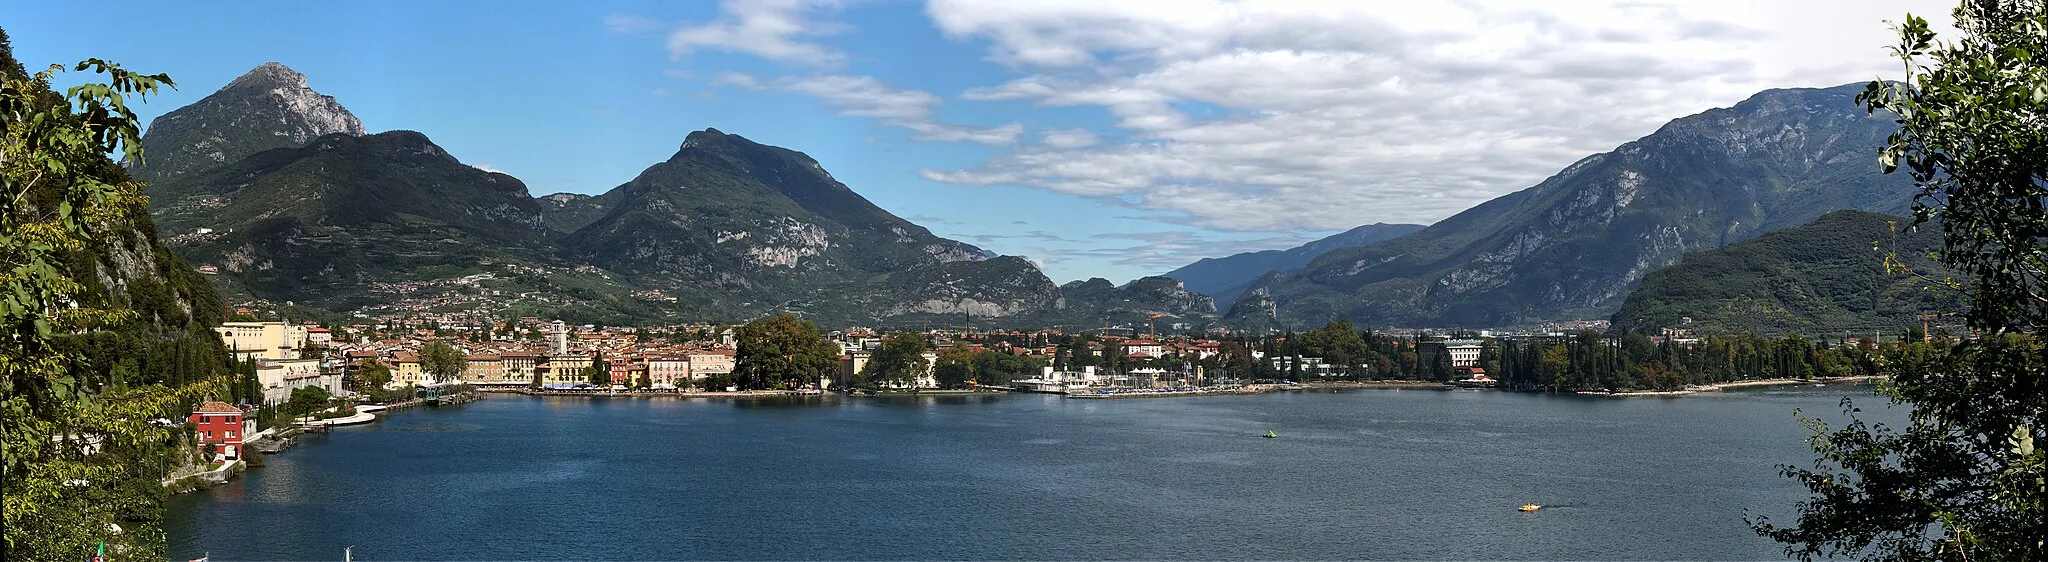 Image of Riva del Garda